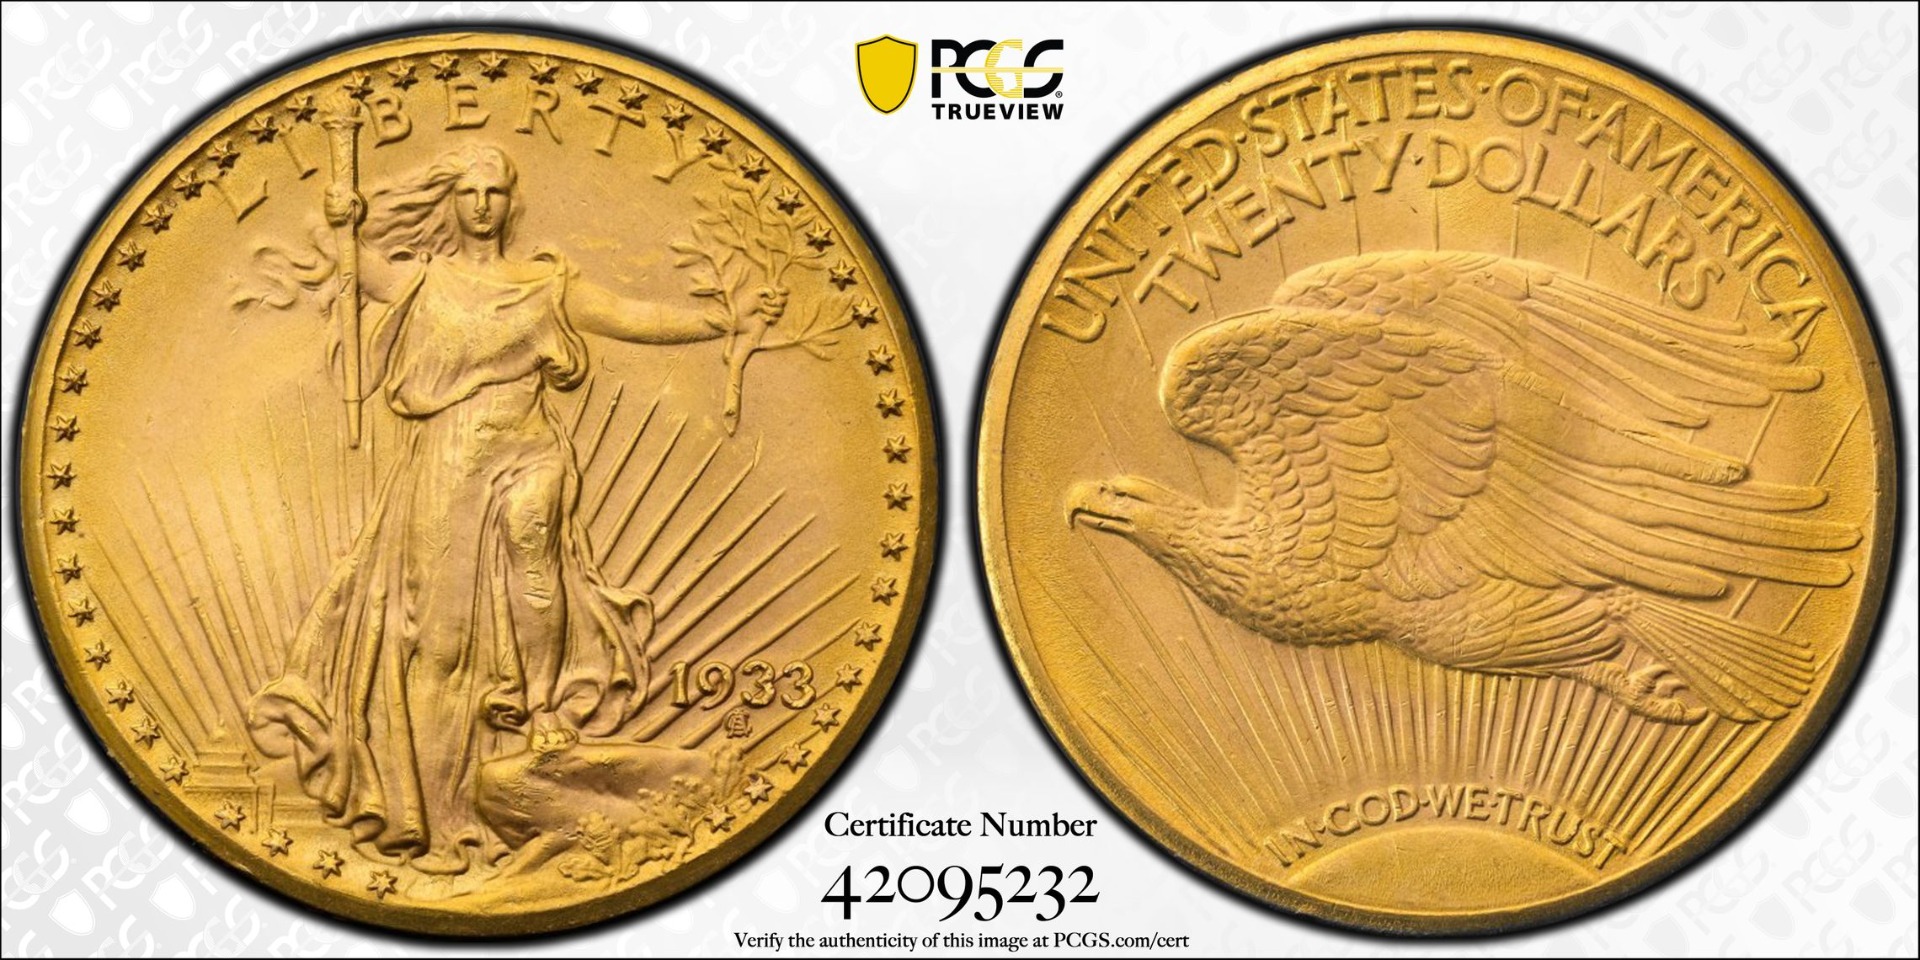 1933 Double Eagle coin